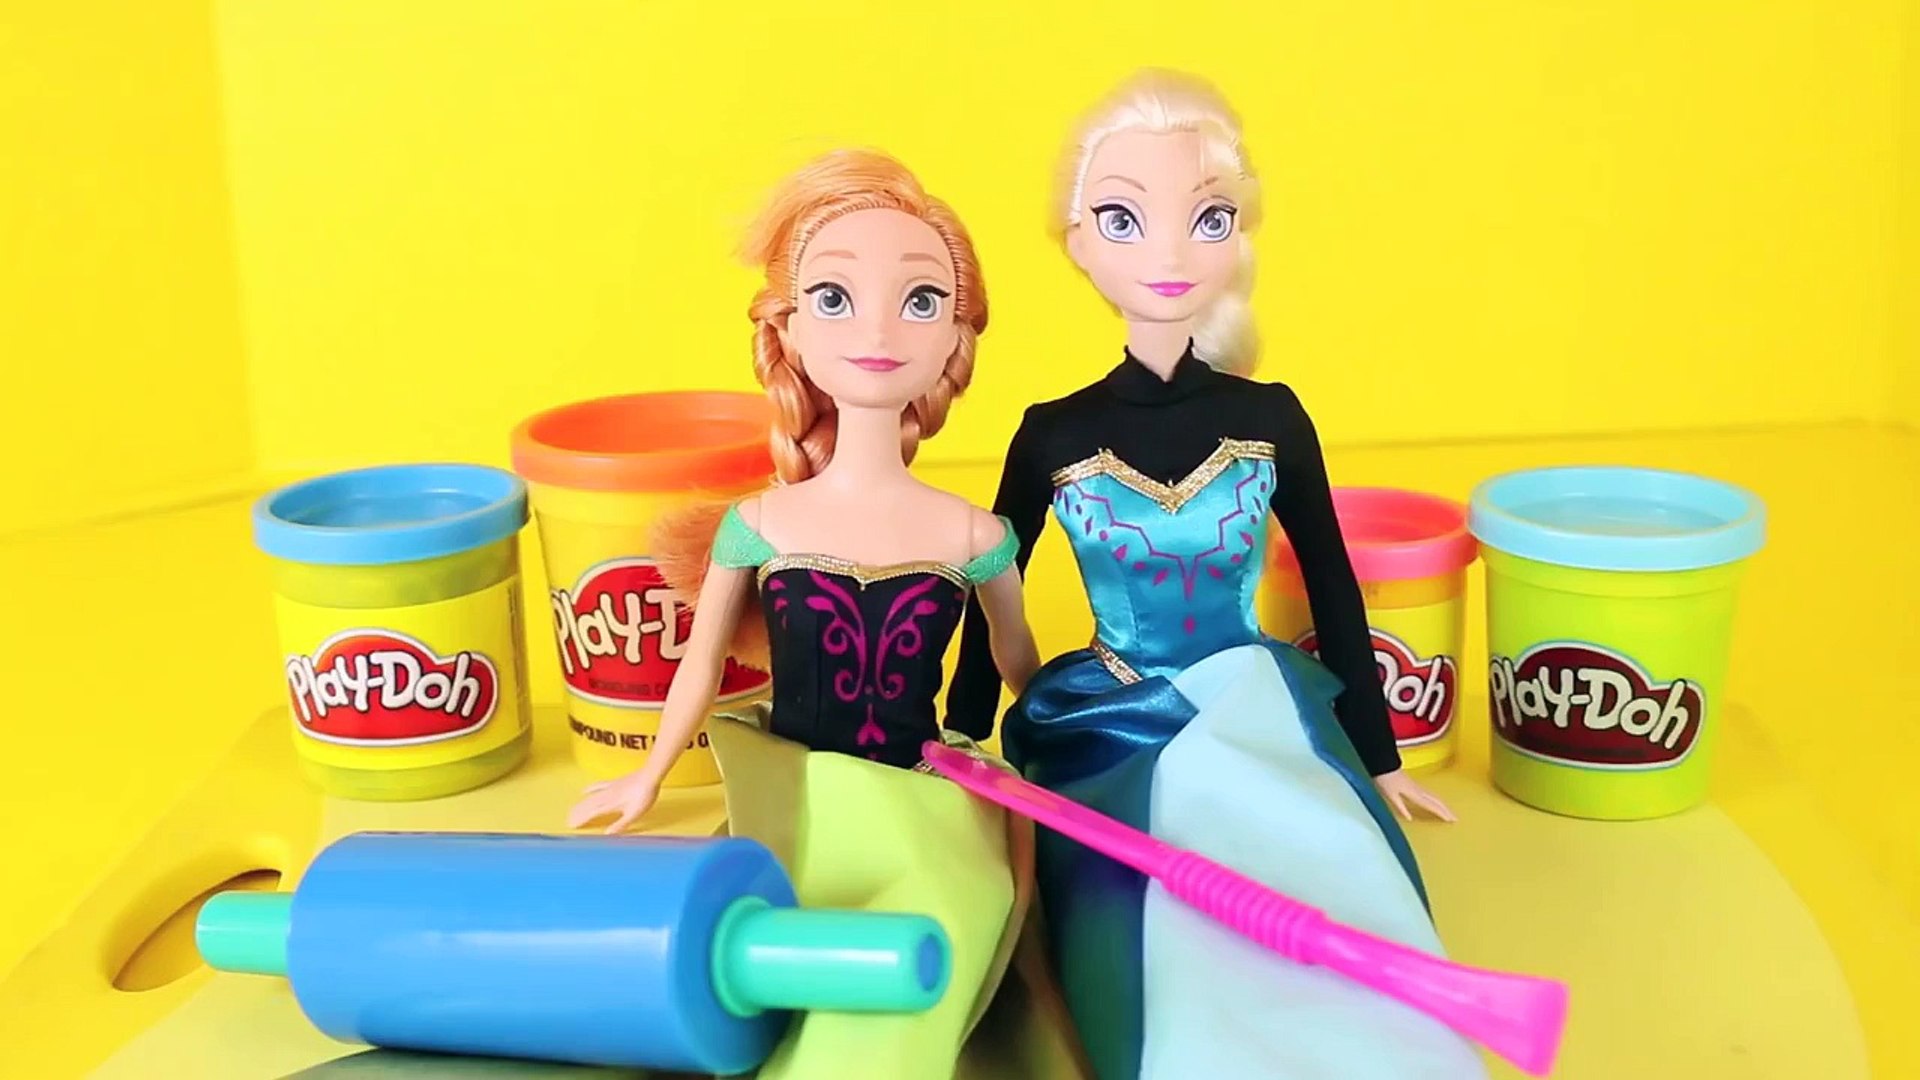 Frozen MERMAID Elsa and Anna Barbie Play Doh Dress Up Mermaids Dolls  DisneyCarToys - Dailymotion Video